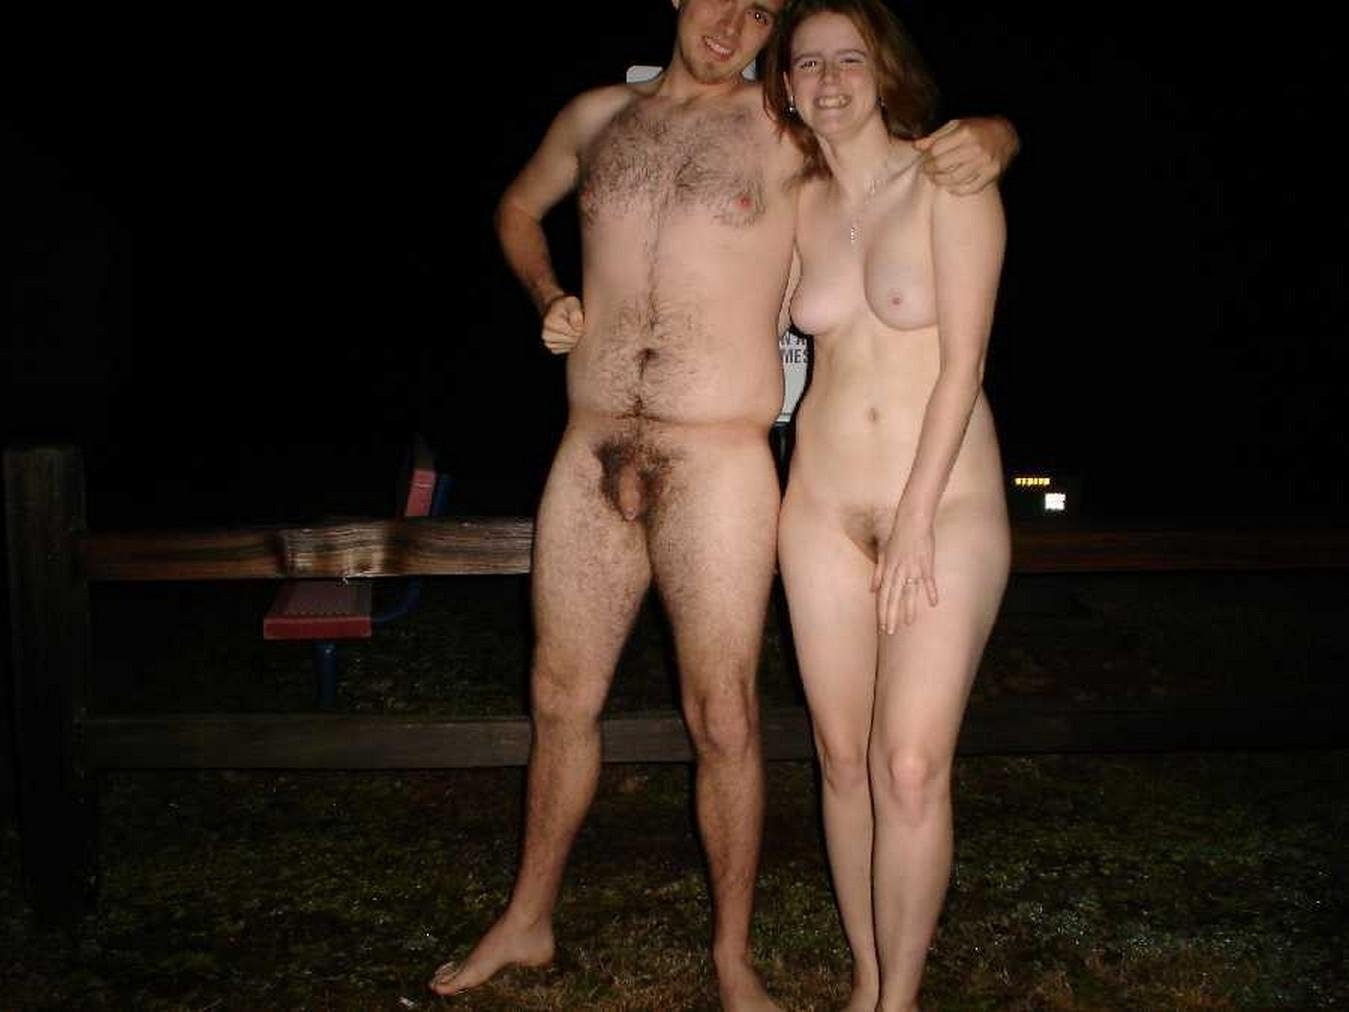 Naked wife husband walk around the house (43 photos)